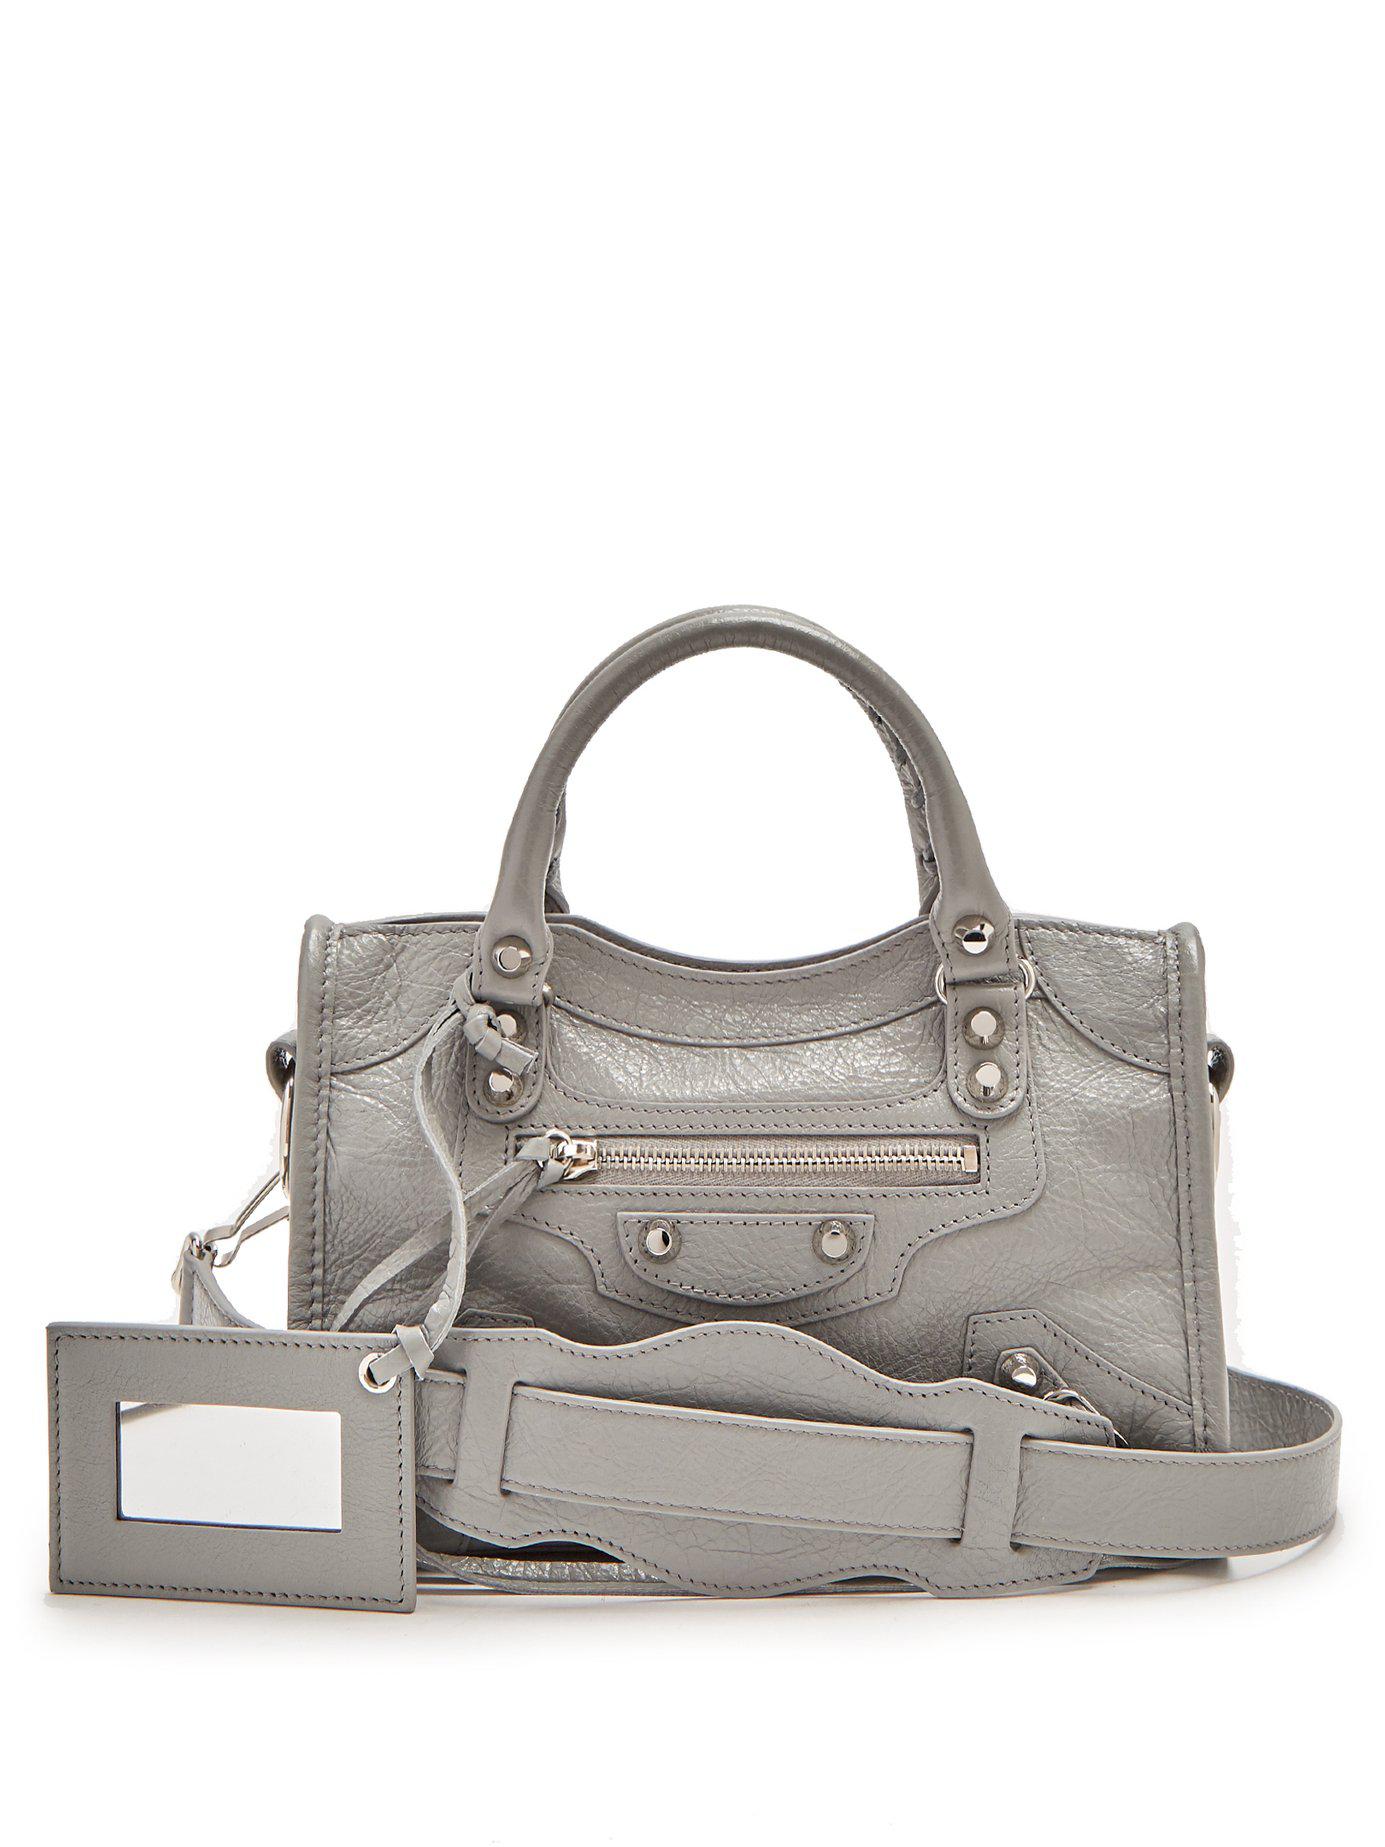 Balenciaga Classic Metallic City Xs Bag in Gray | Lyst